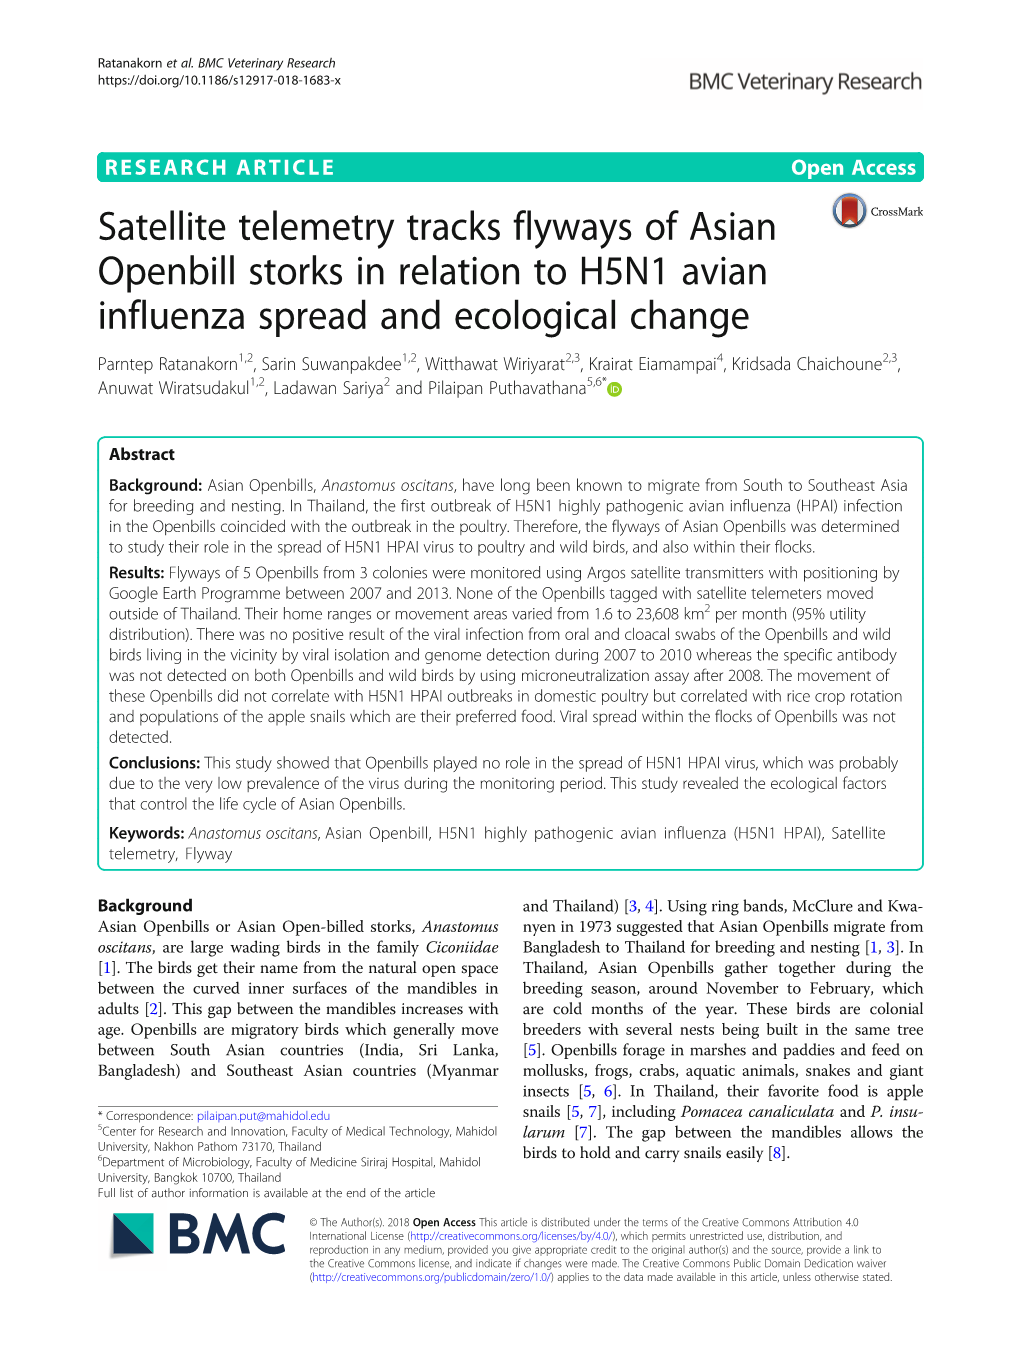 Satellite Telemetry Tracks Flyways of Asian Openbill Storks in Relation To